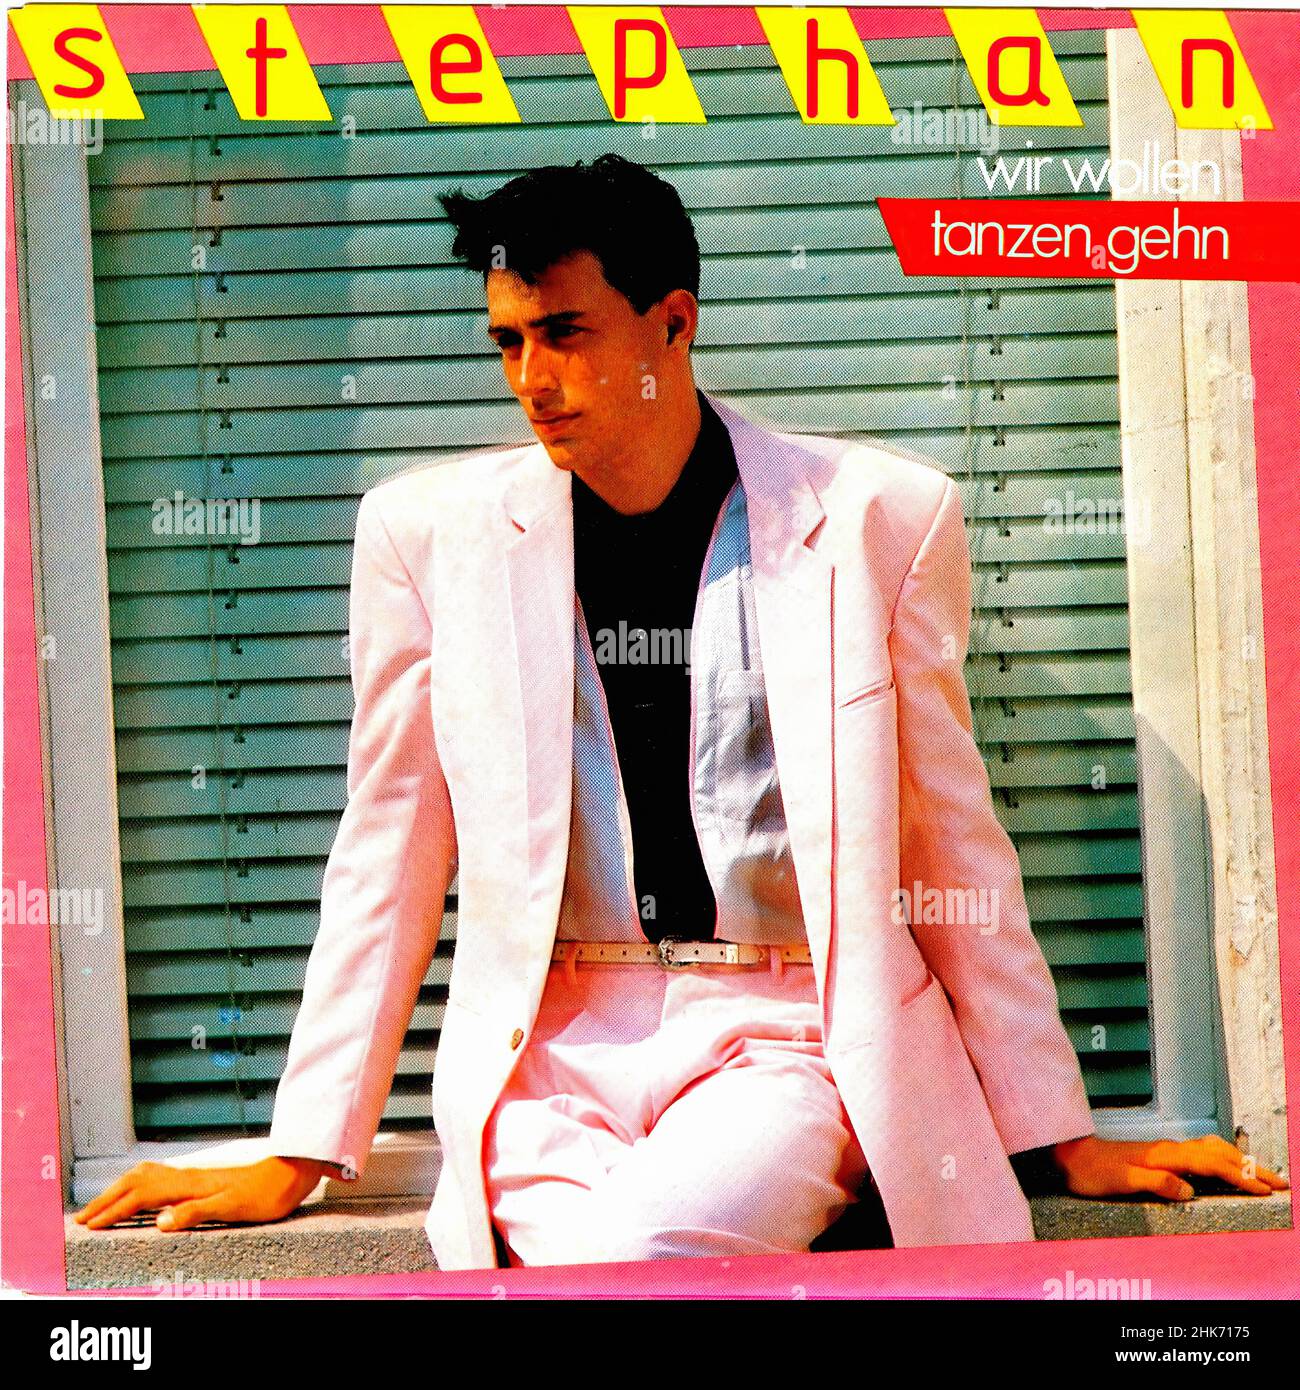 Copertina Vintage vinyl record - Stephan - Wollen wir tanzen gehn - D - 1982 h Foto Stock